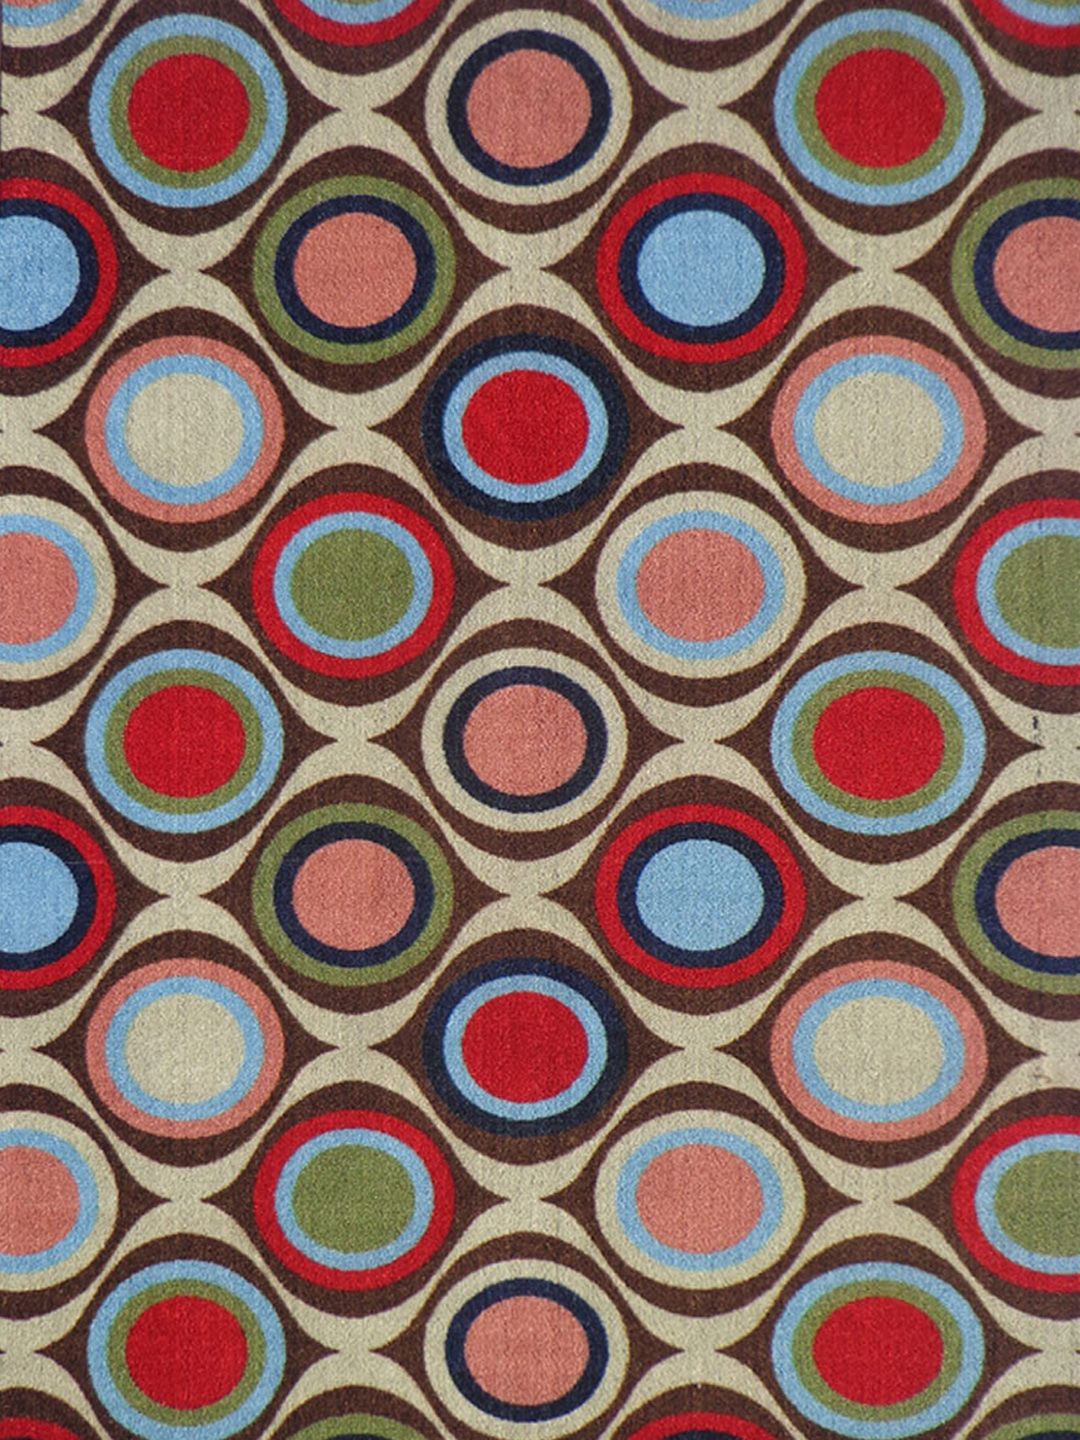 Status Multicoloured Printed Nylon Anti-Skid Taba Carpet Price in India